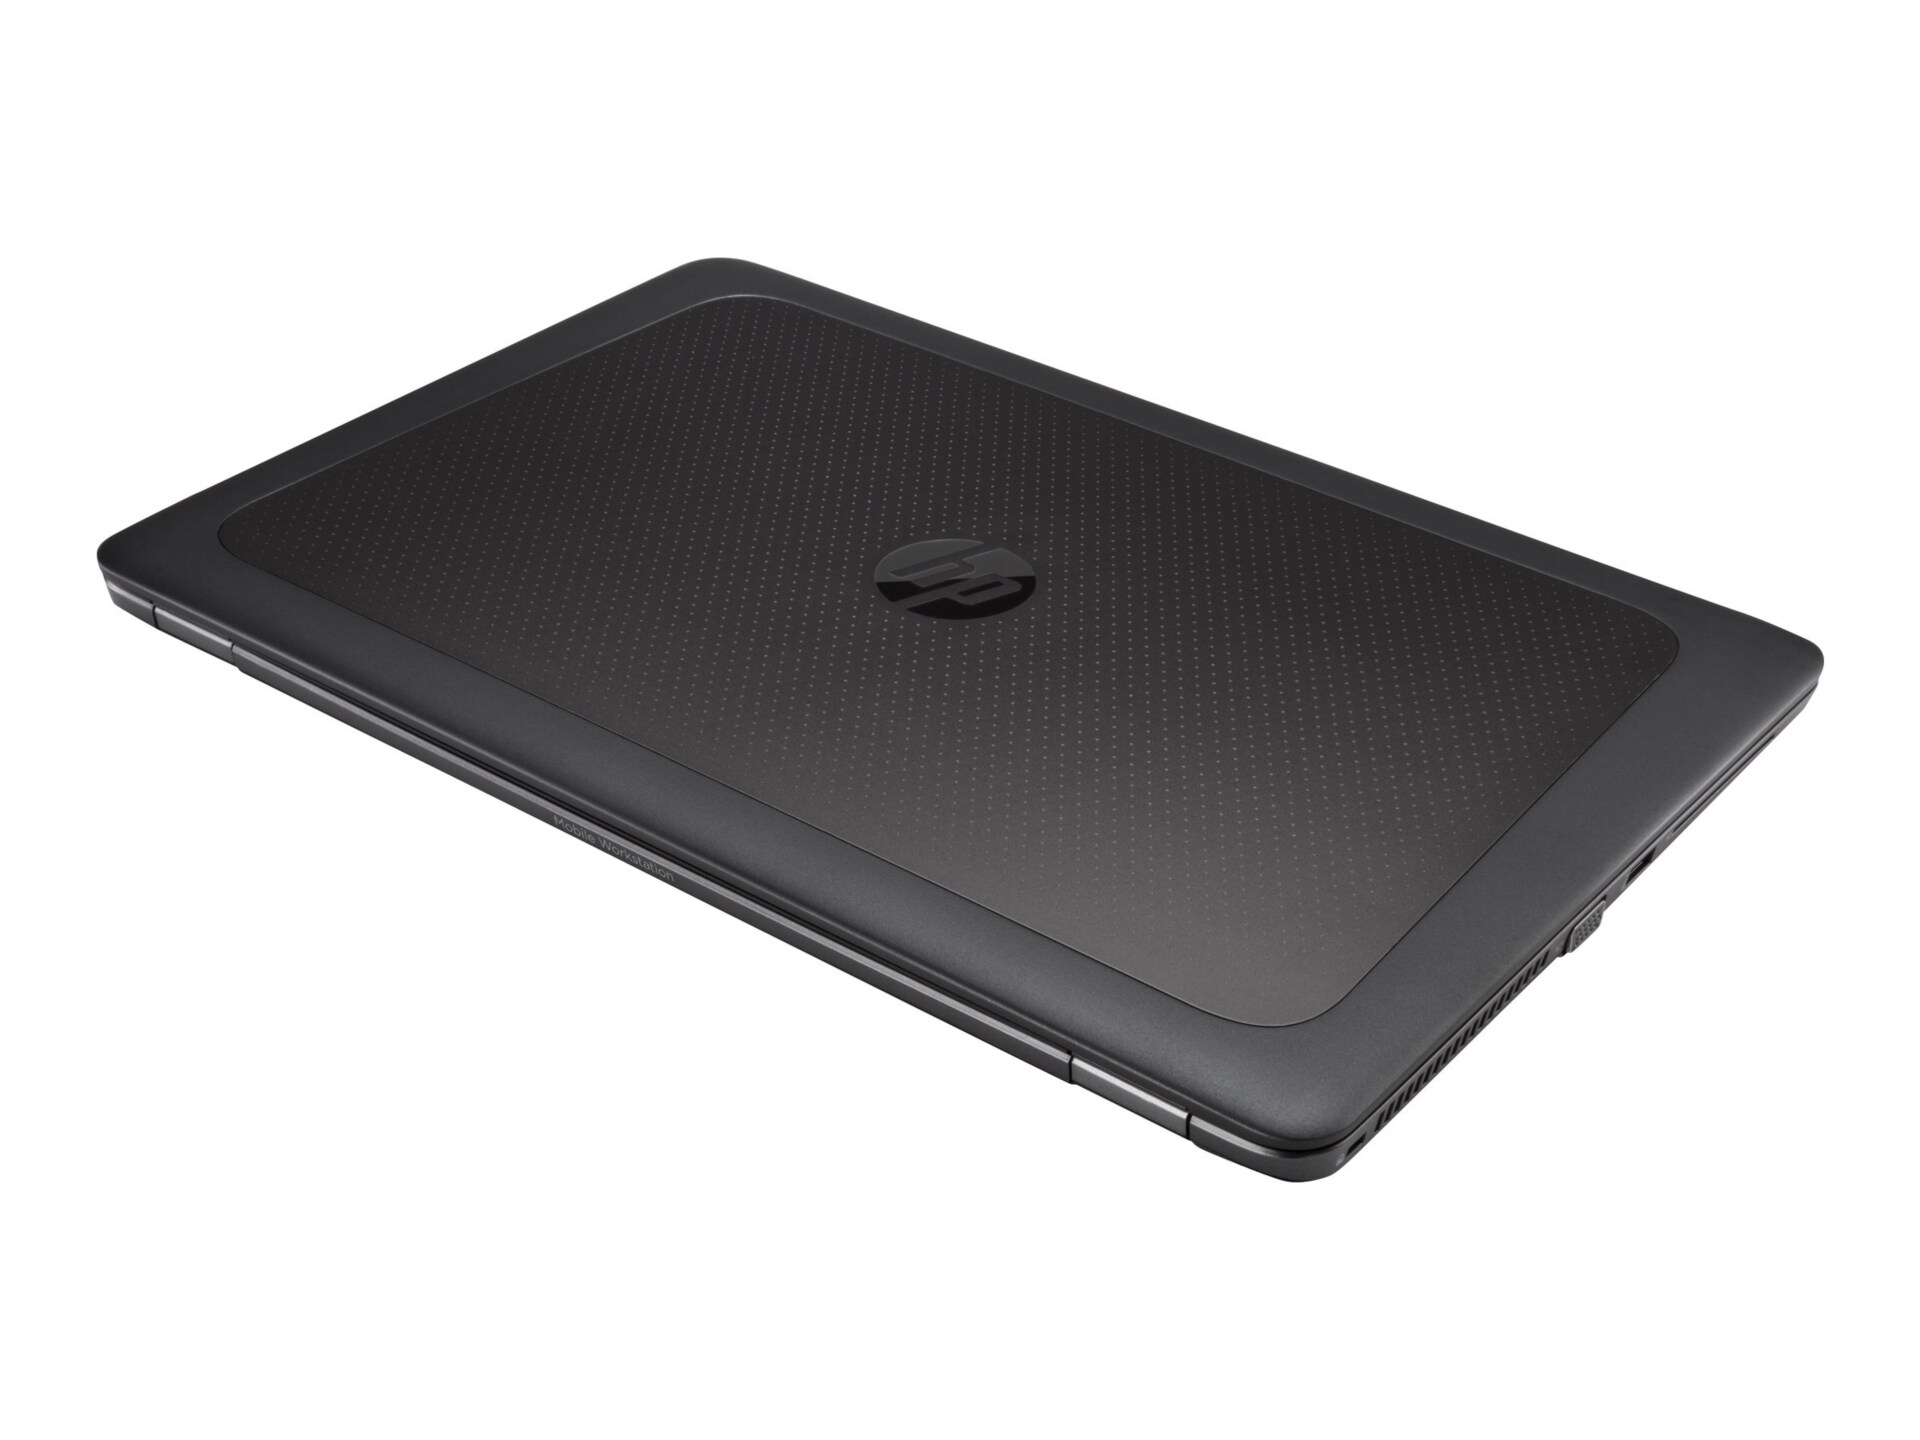 HP ZBook 15u G3 Mobile Workstation - 15.6" - Core i7 6600U - 8 GB RAM - 256 GB SSD - US